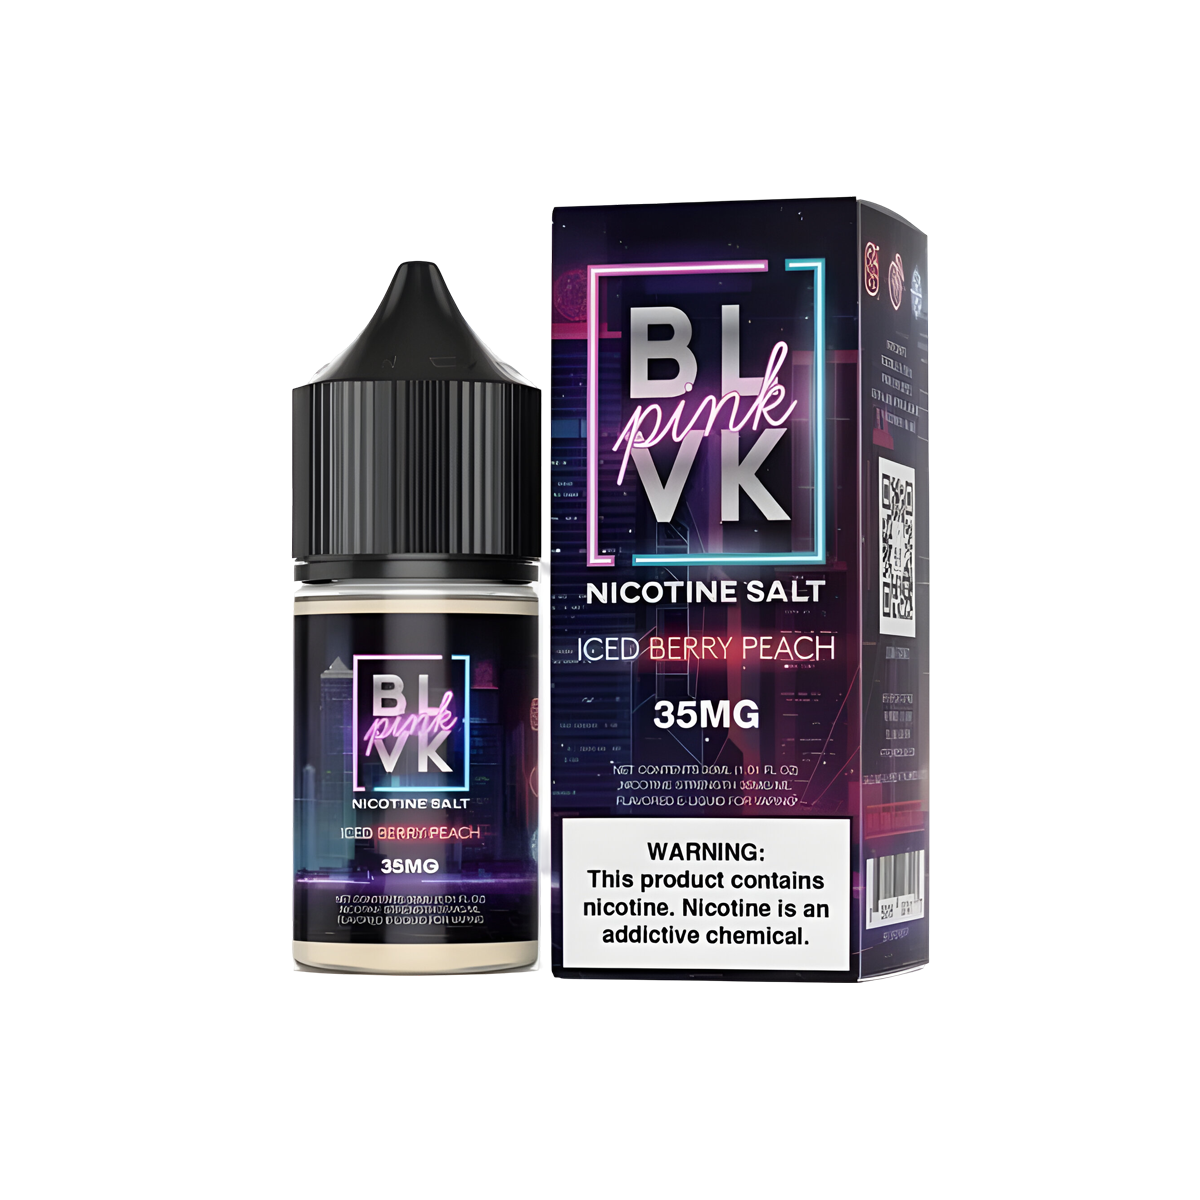 BLVK Pink Salt Nicotine Vape Juice 50 Mg 30 Ml Strawberry Peach Ice